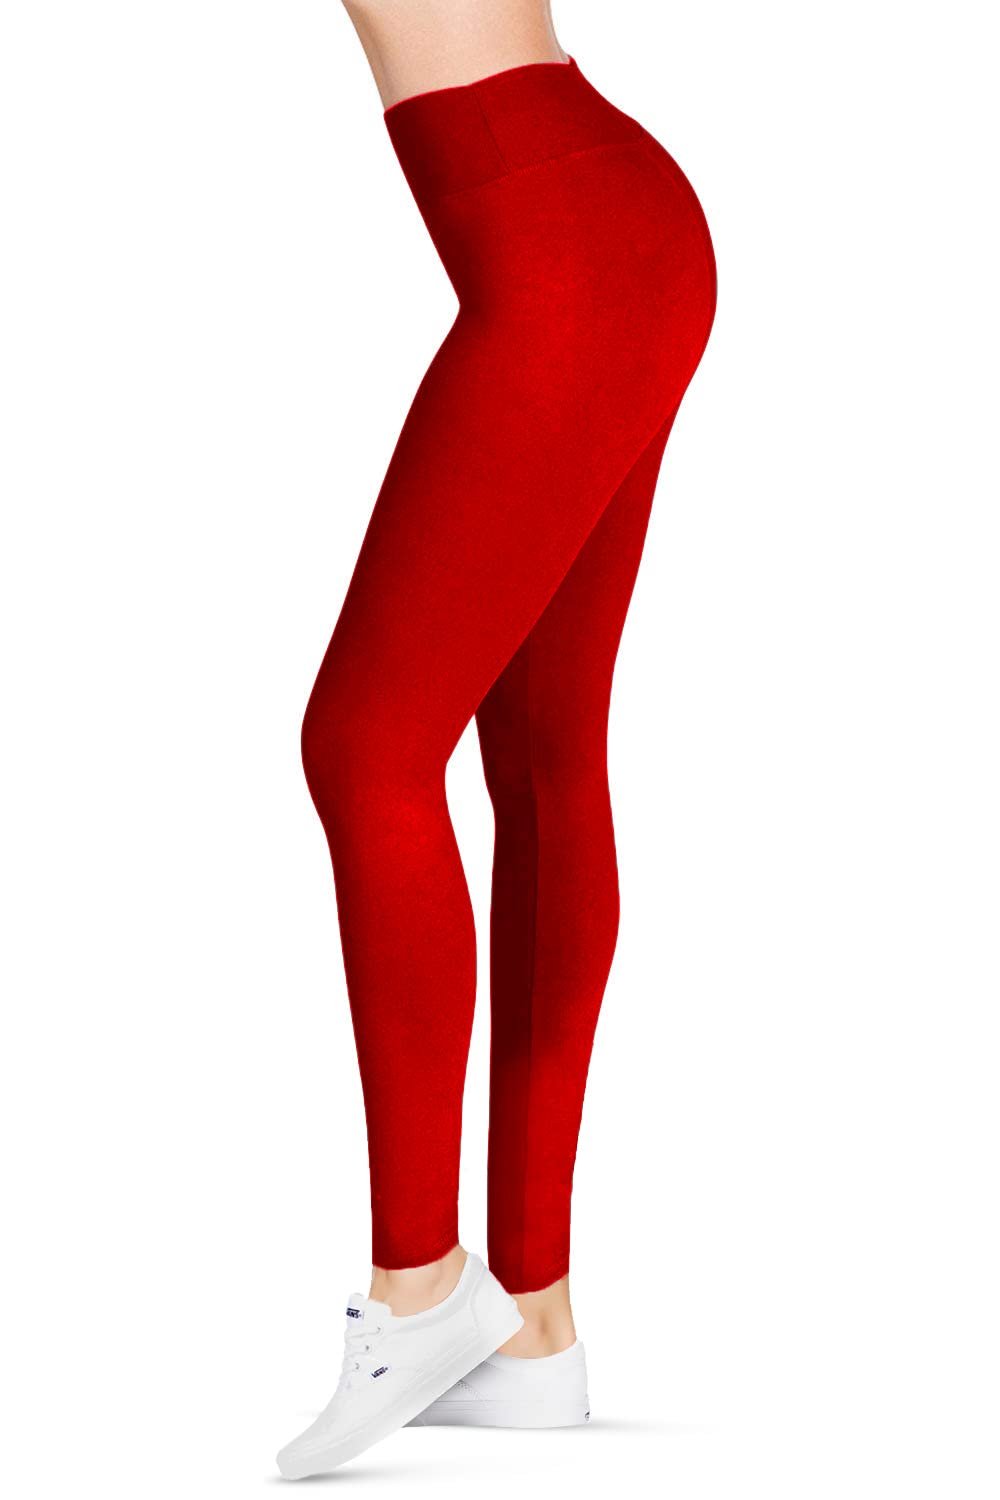 Red SATINA High Waisted Leggings for Women - One Size Yoga Leggings | 3 Waistband